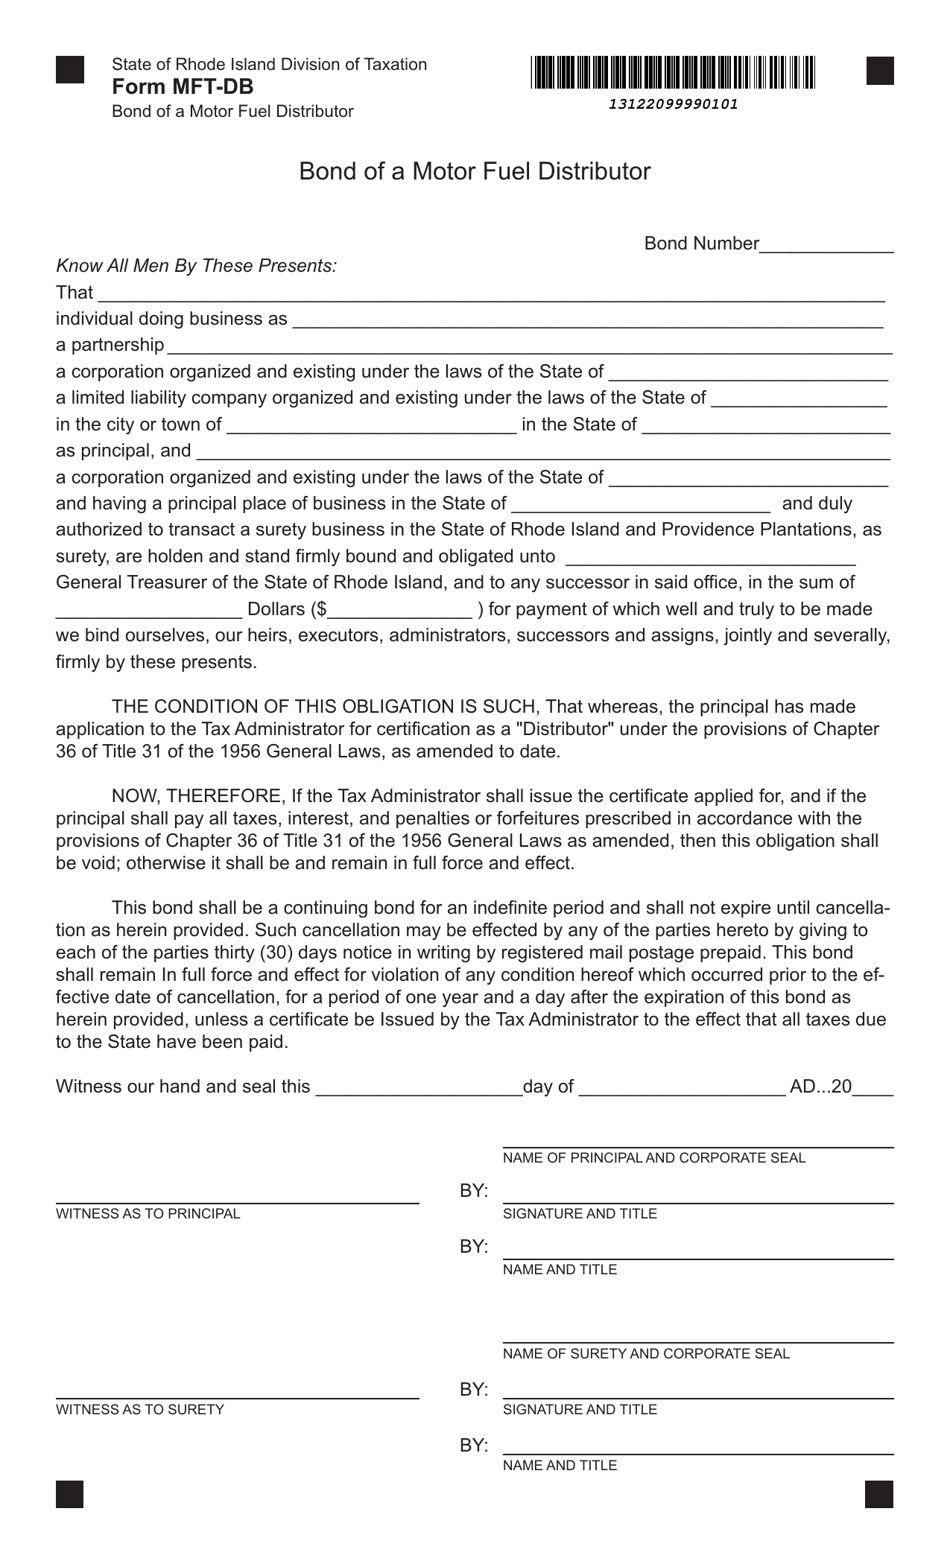 Form MFT-DB Bond of a Motor Fuel Distributor - Rhode Island, Page 1